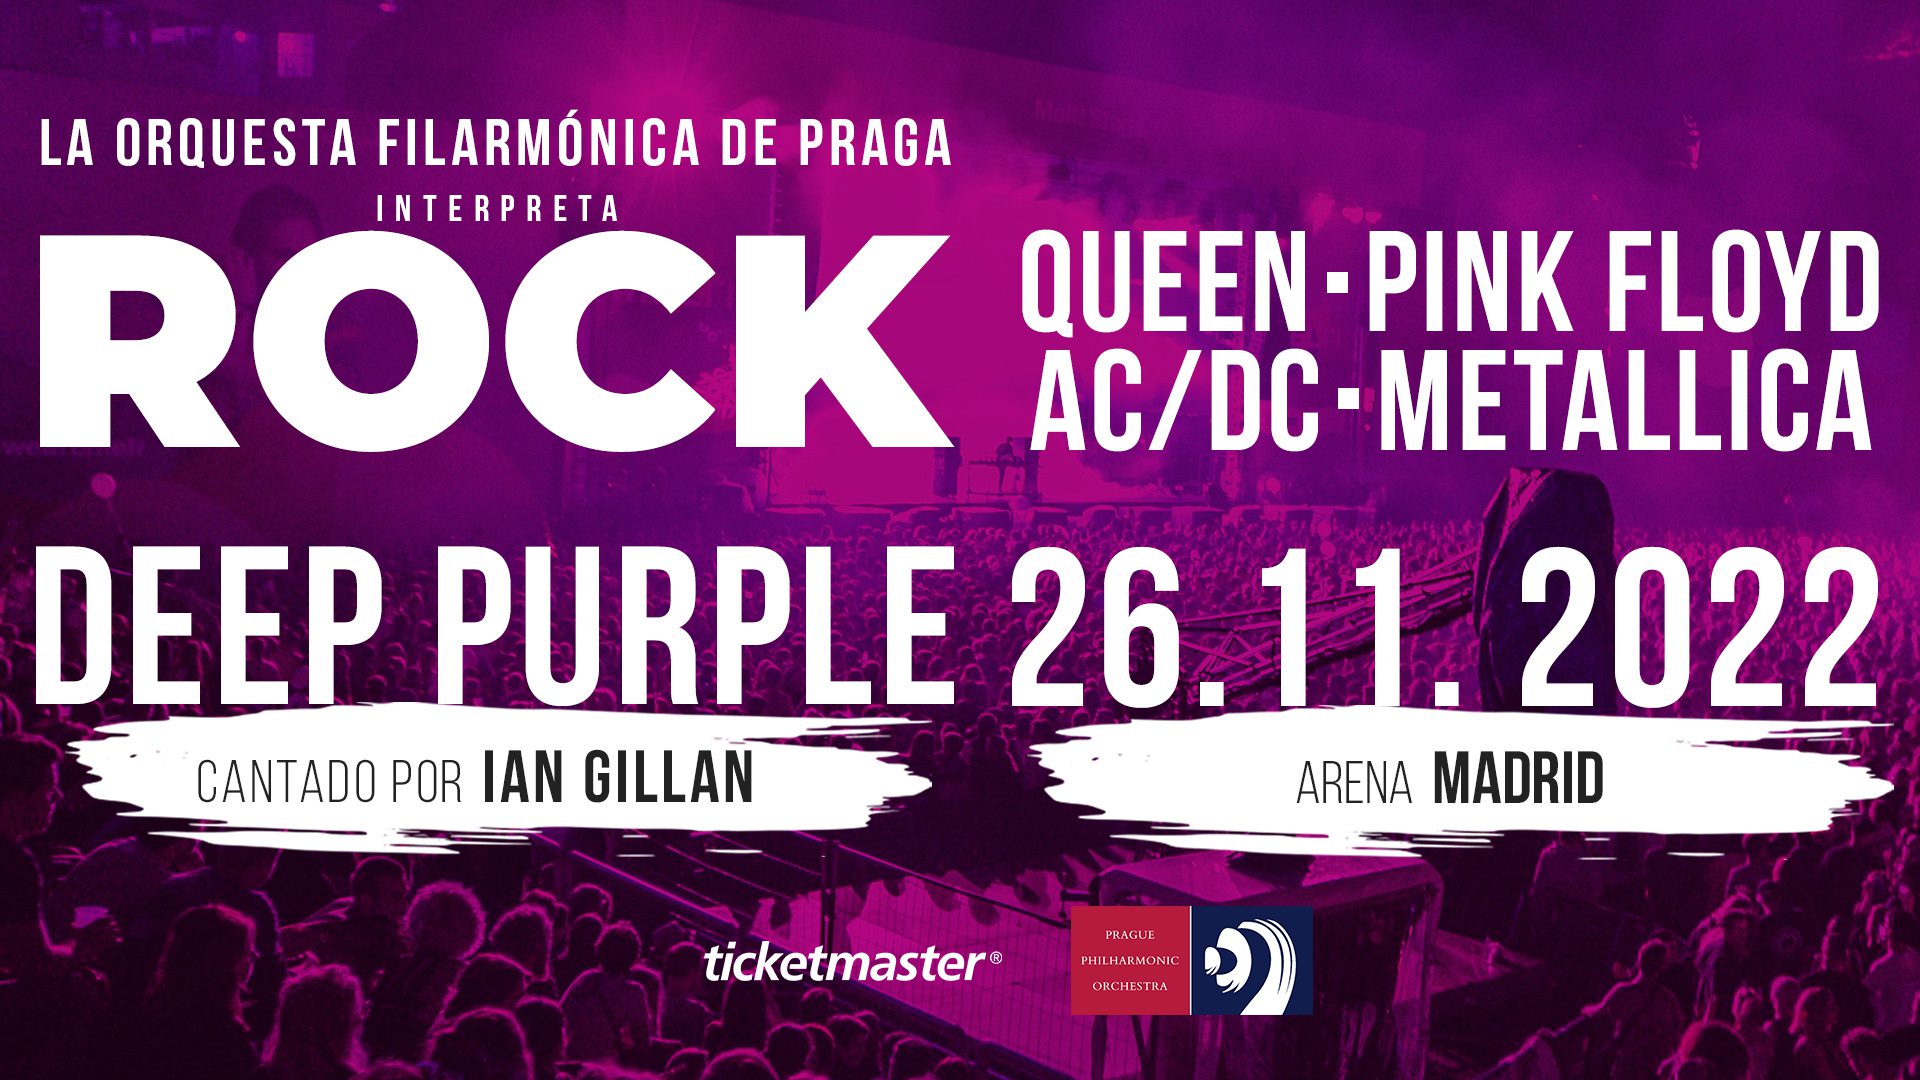 Ian Gillan de Deep Purple junto a la Orquesta Filarmónica de Praga este sábado en Madrid